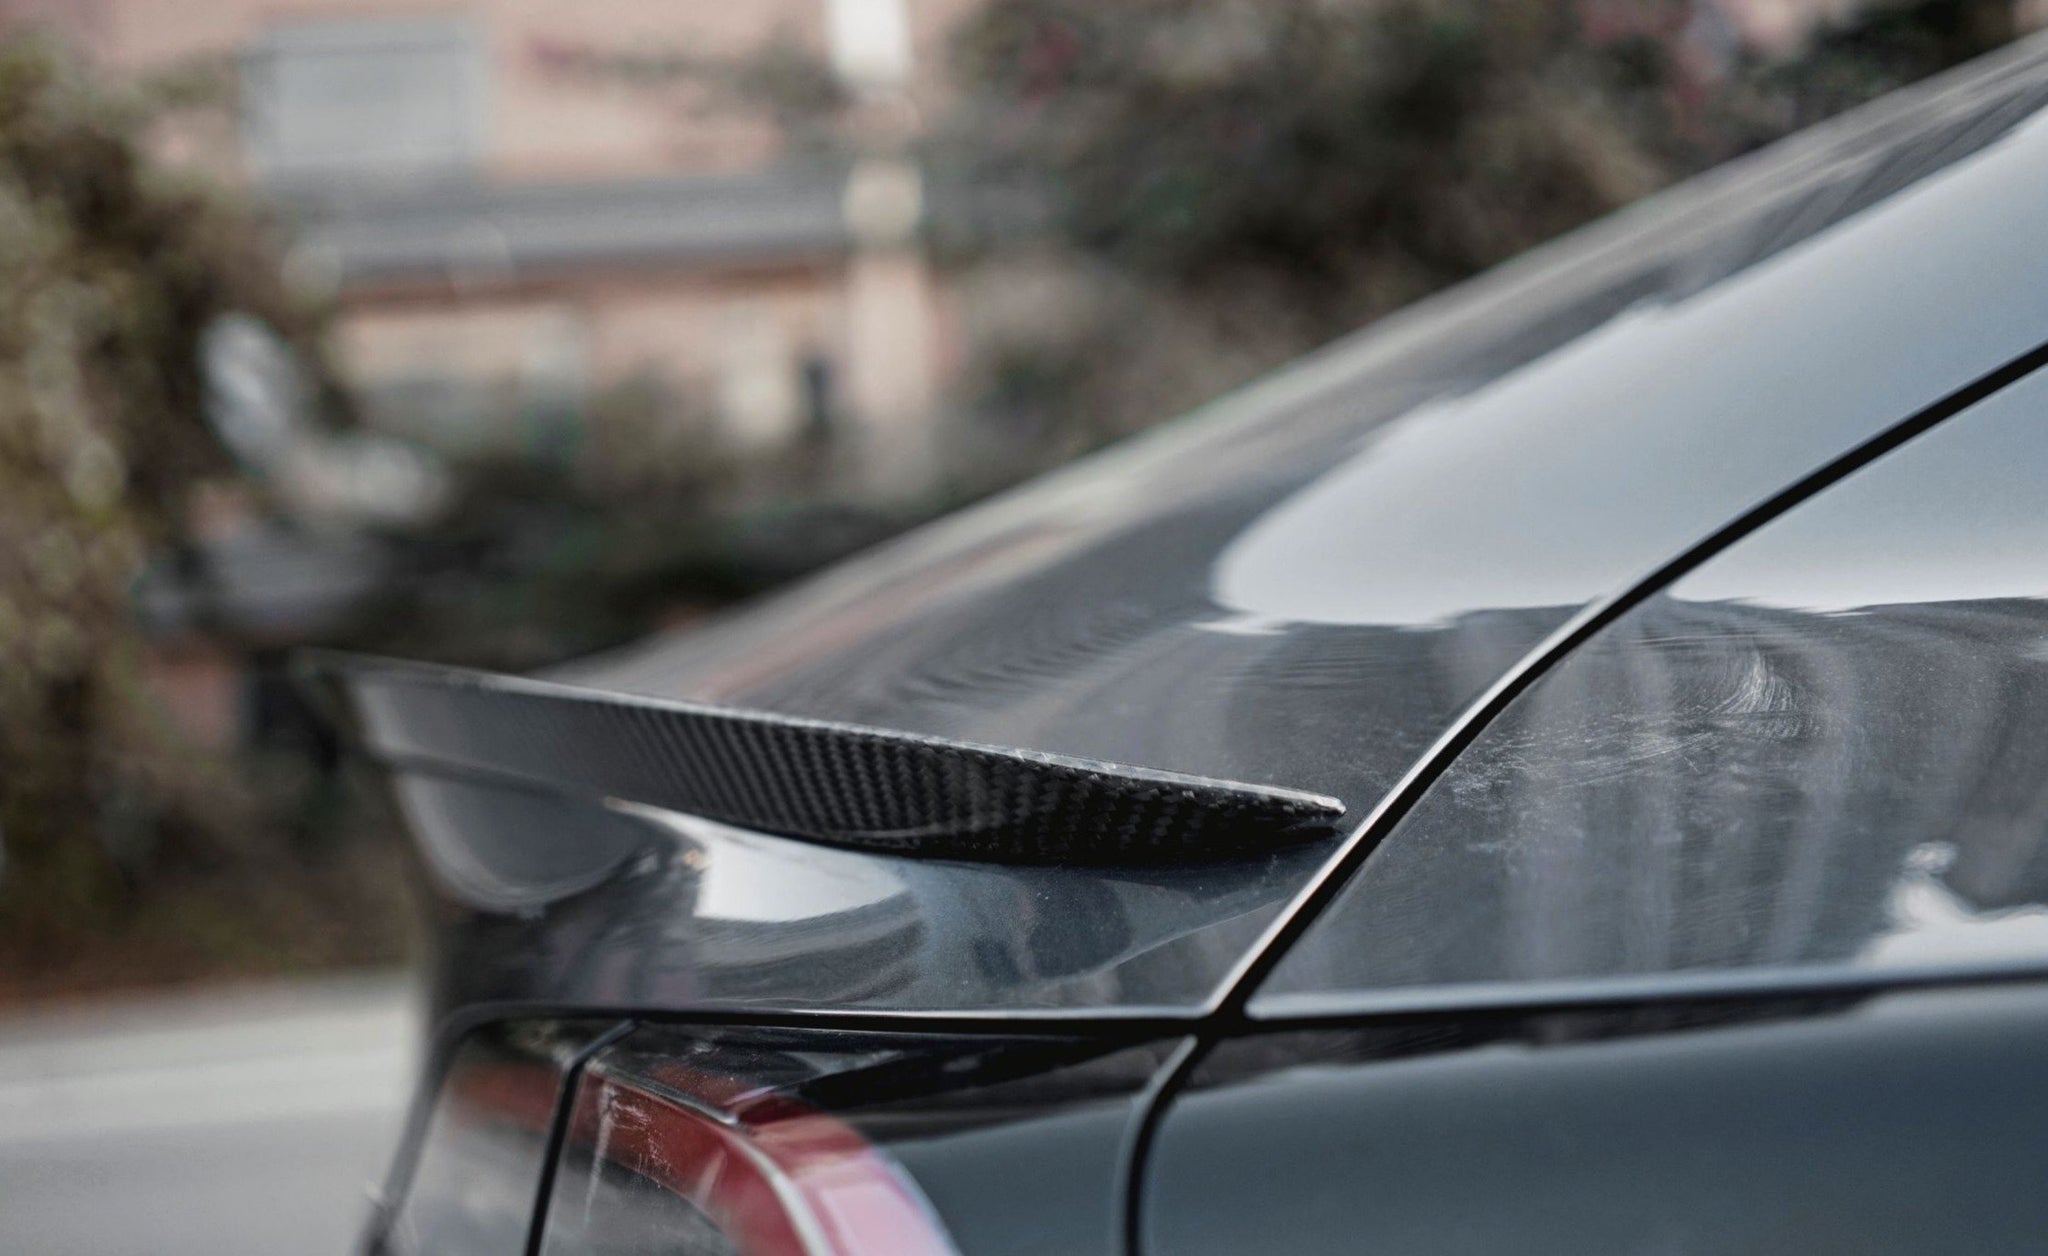 New Release!!! CMST Tesla Model 3 Carbon Fiber Rear Spoiler Wing